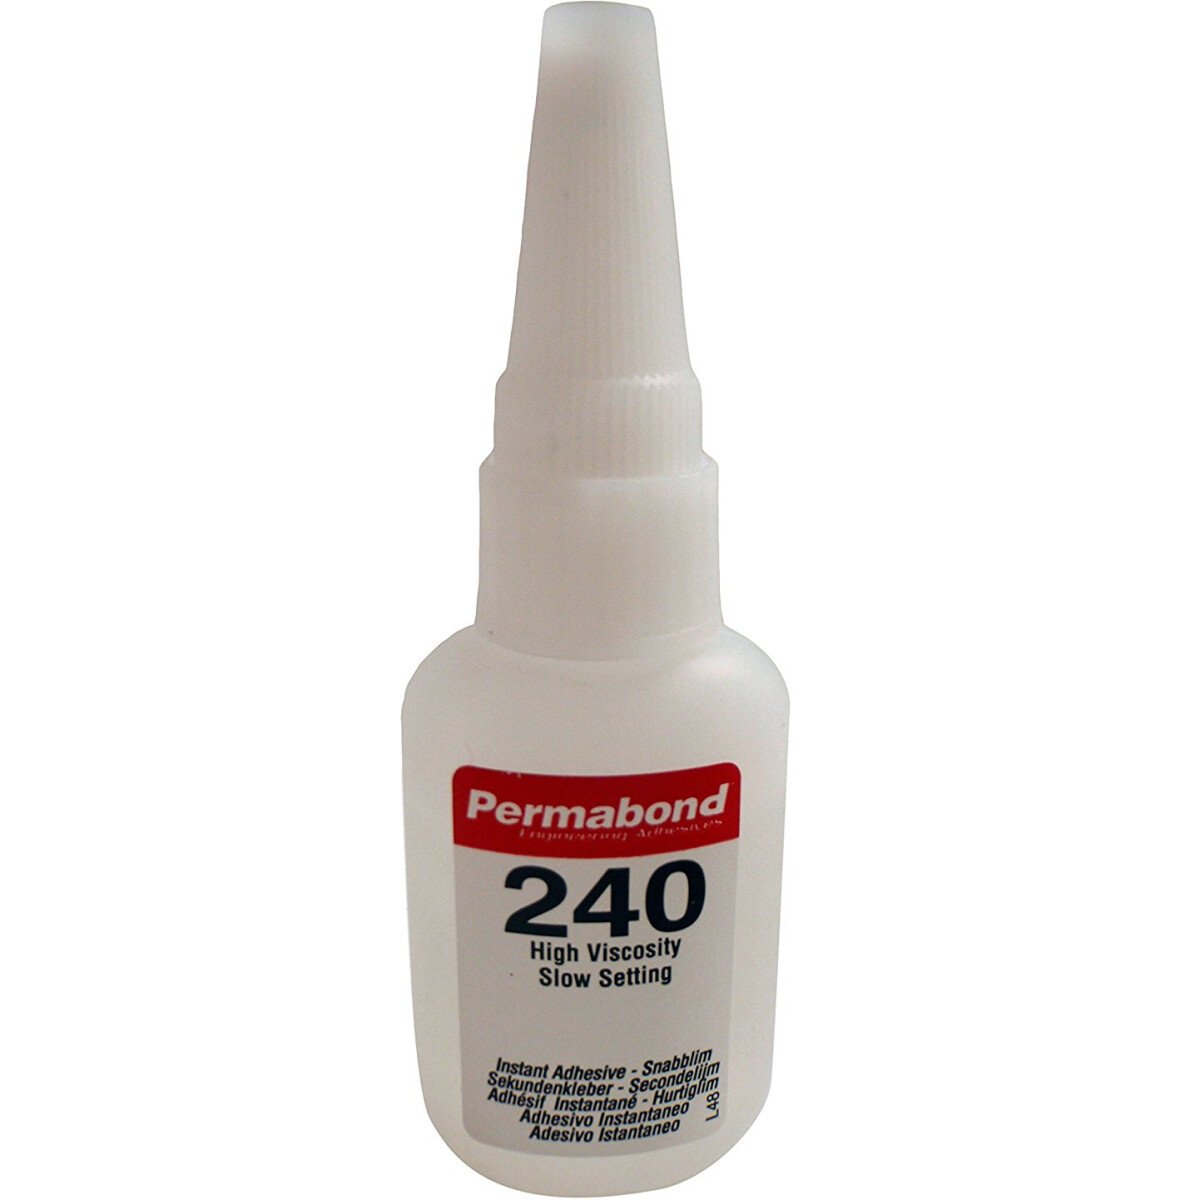 Permabond 240 - 20g Slower Cure Cyanoacrylate 'Superglue' Adhesive - Box of 15